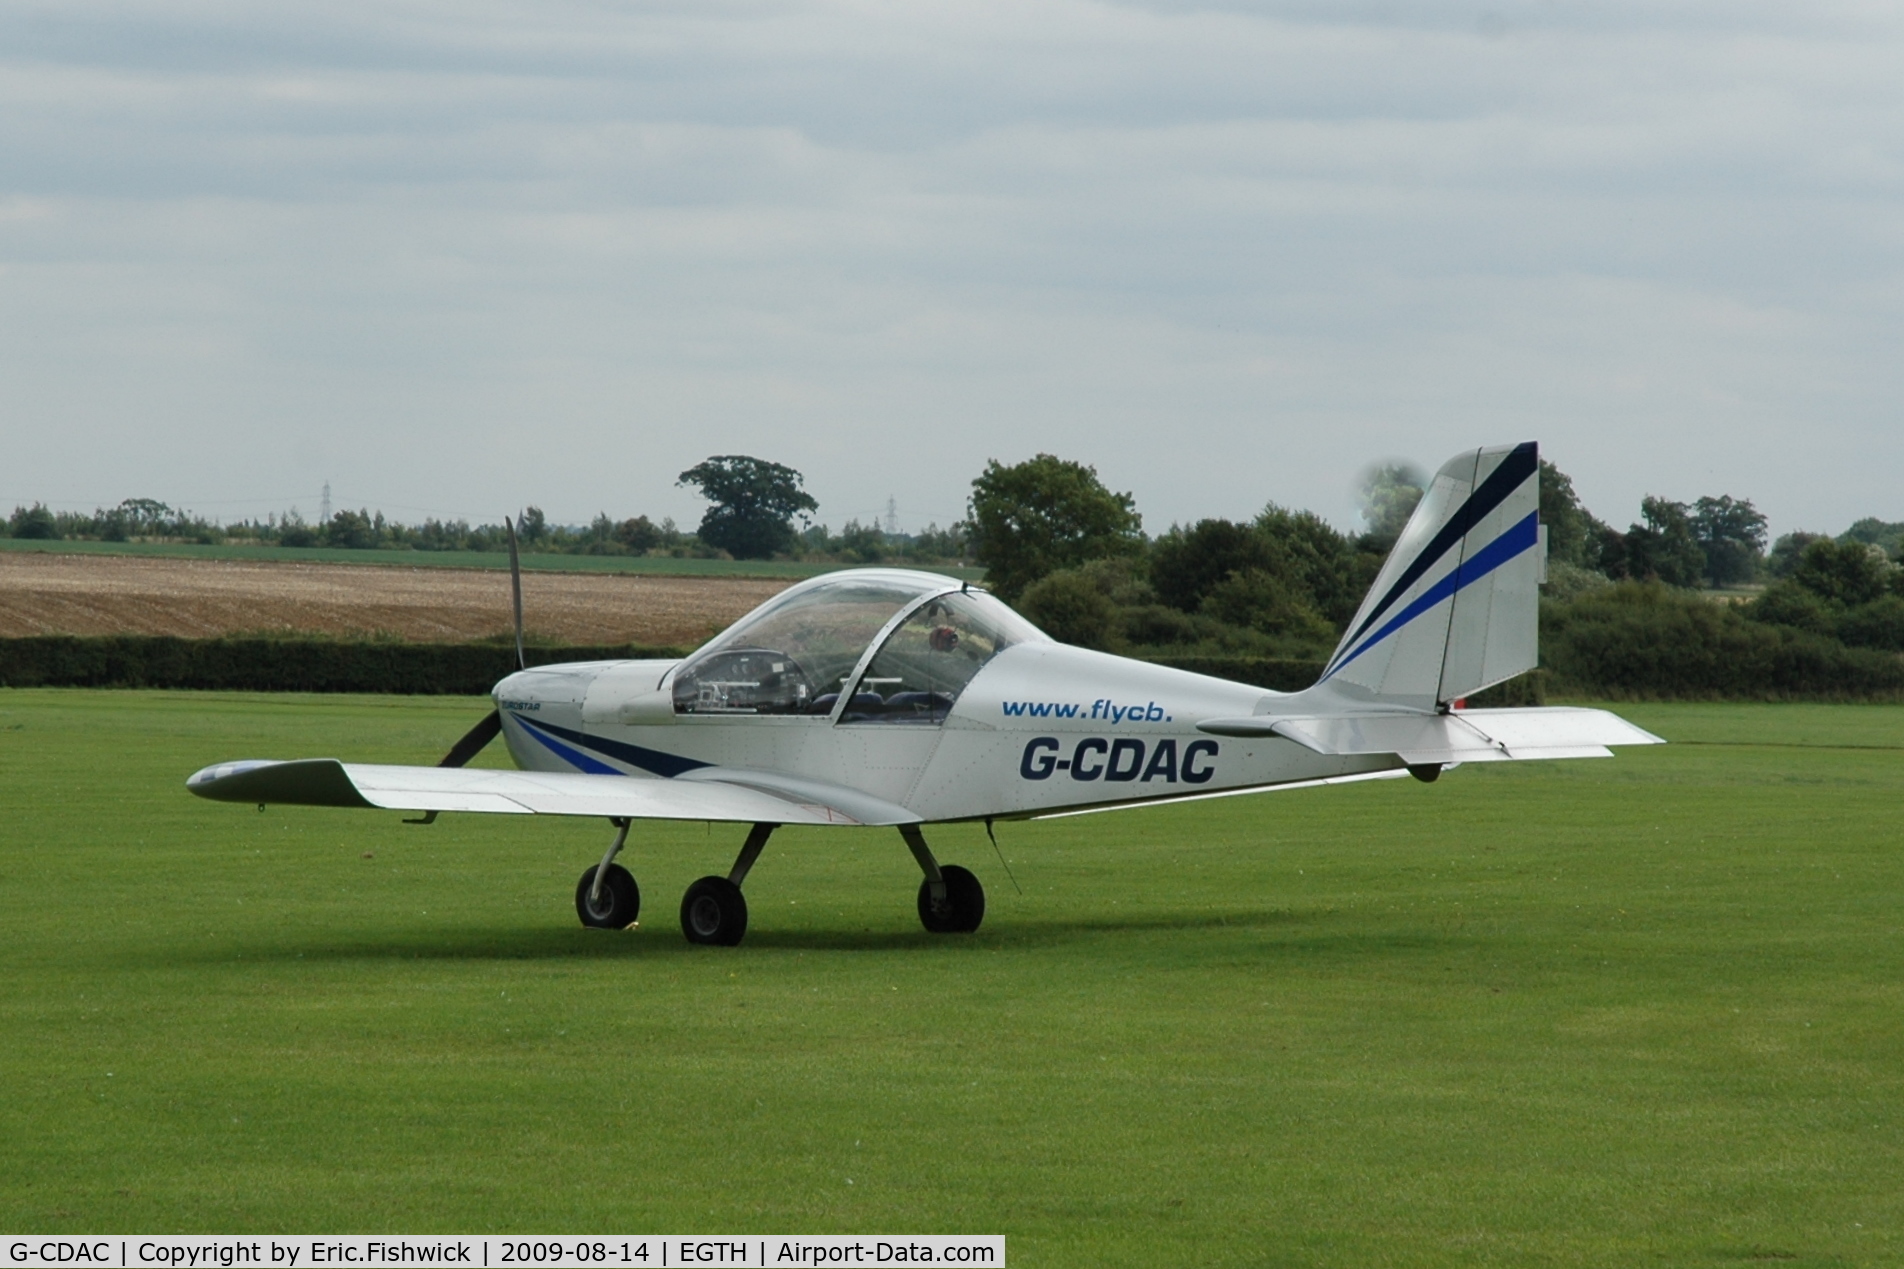 G-CDAC, 2004 Cosmik EV-97 TeamEurostar UK C/N 2116, G-CDAC at Shuttleworth (Old Warden) Aerodrome.